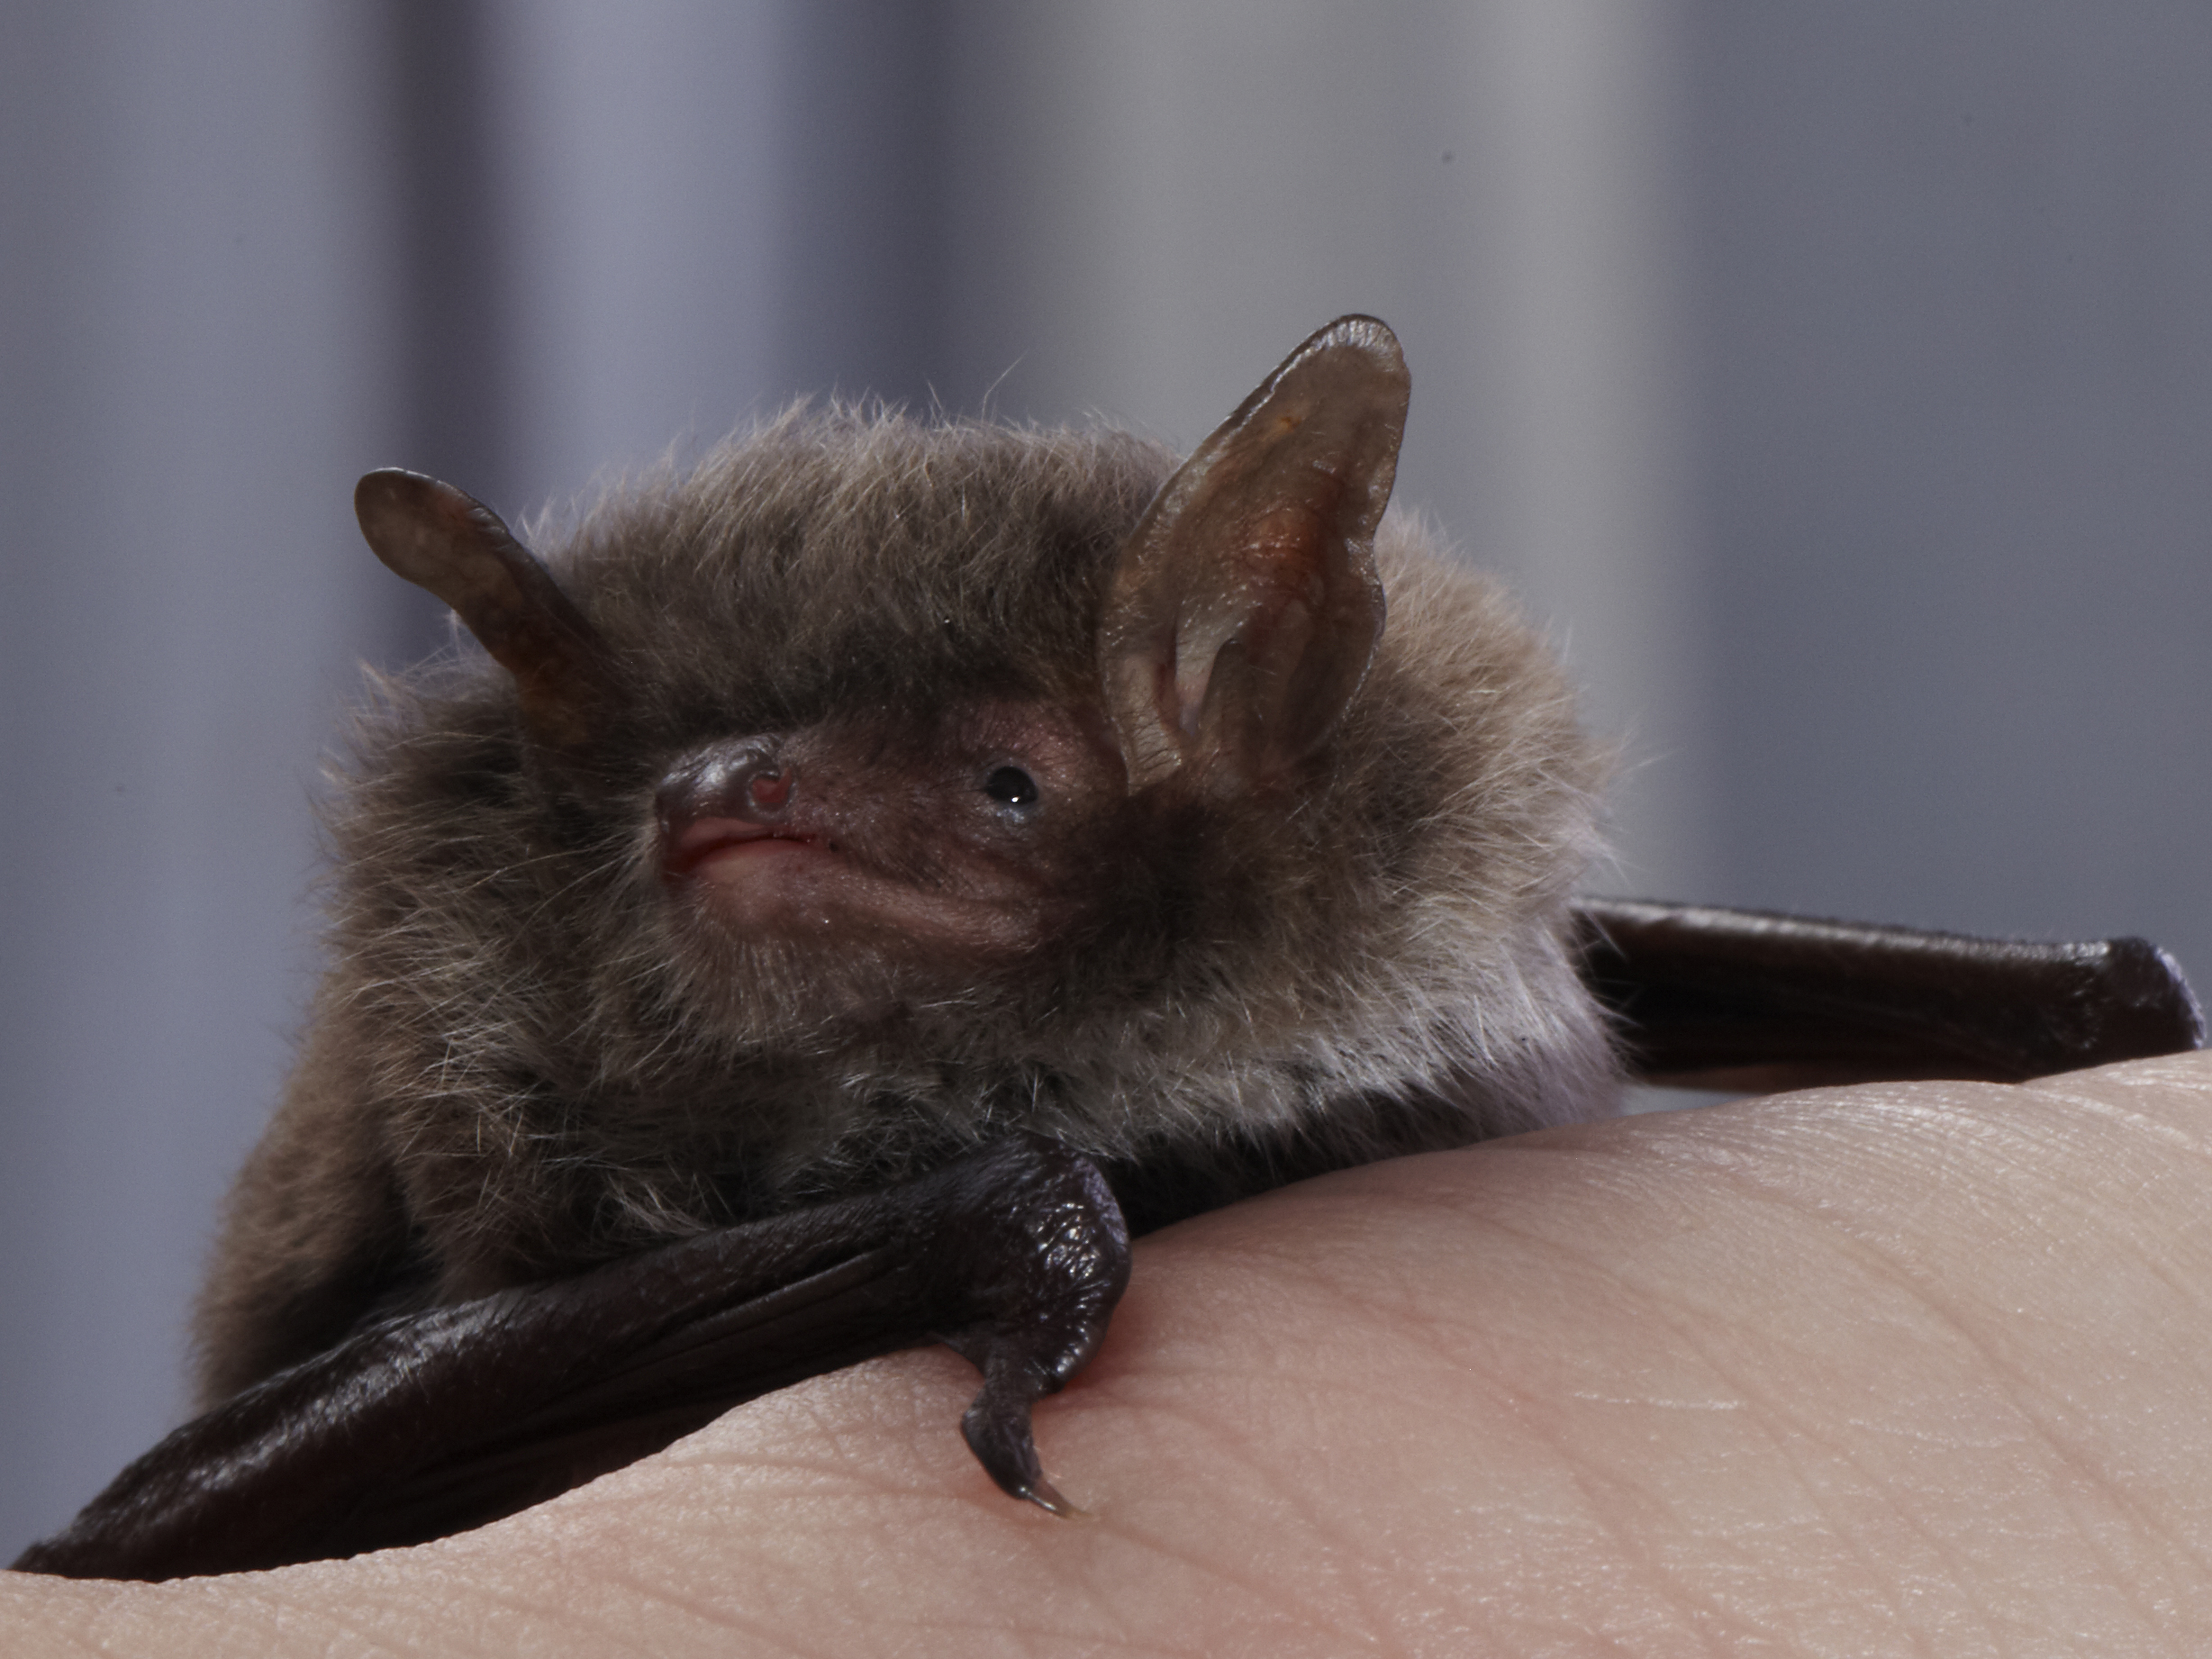 Bats Have Unique Superfast Squeak Muscles to Make Superfast Echolocation Calls